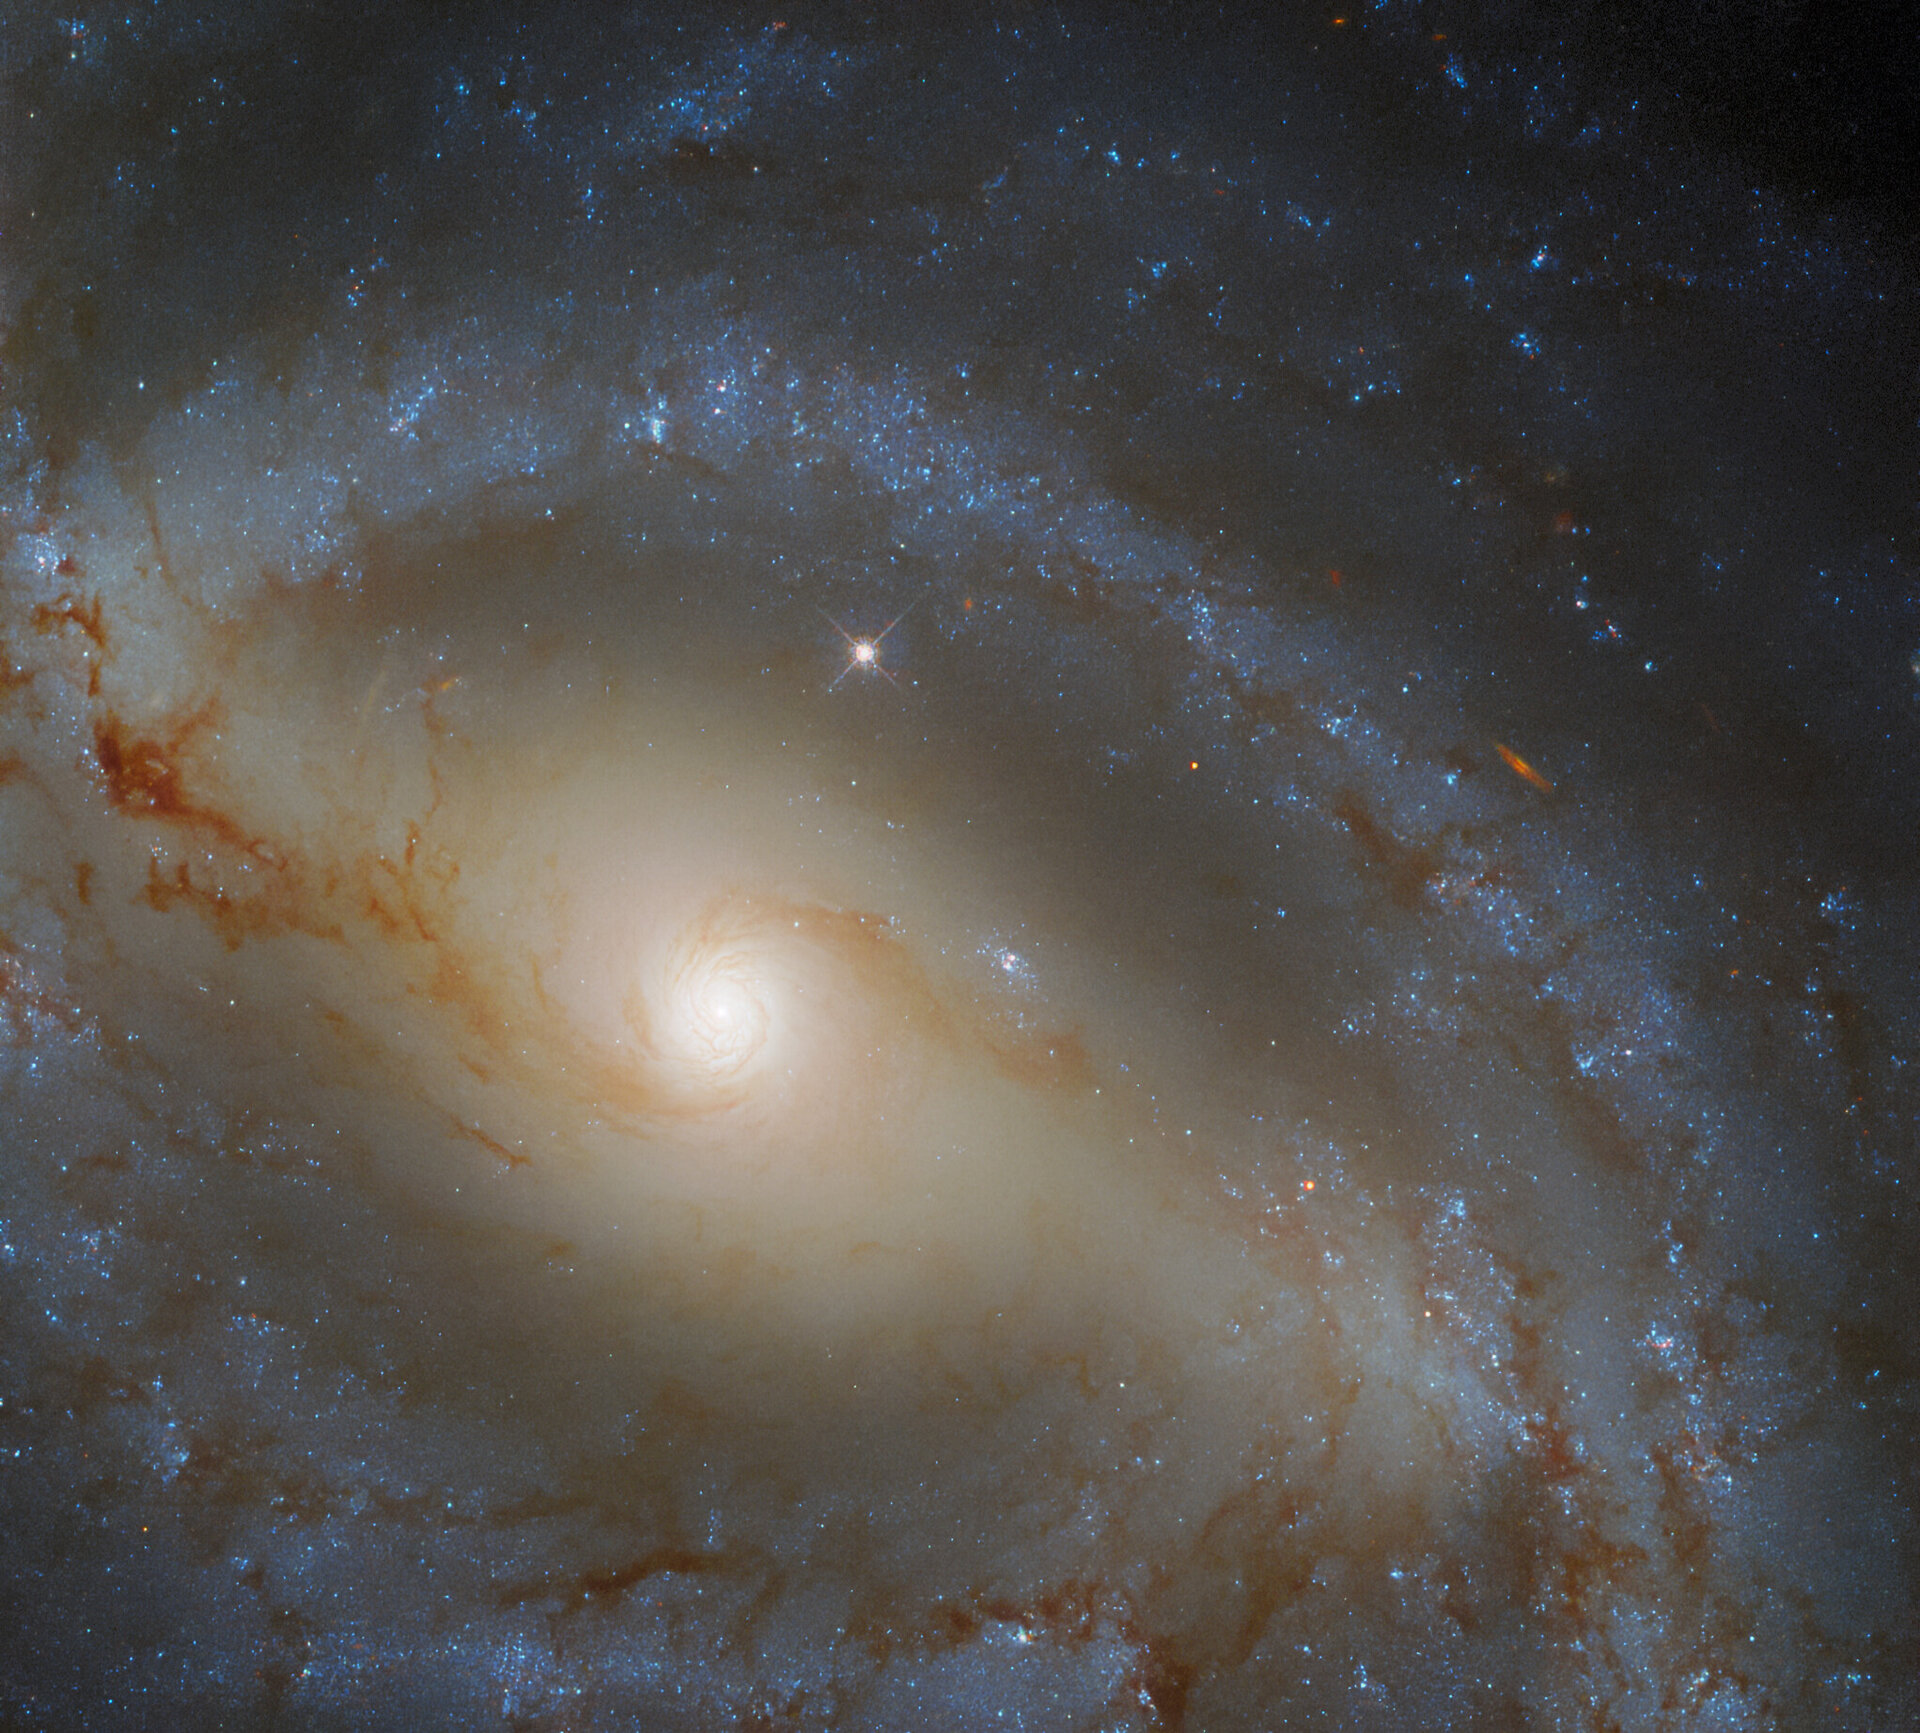 Hubble spies a serpentine spiral galaxy